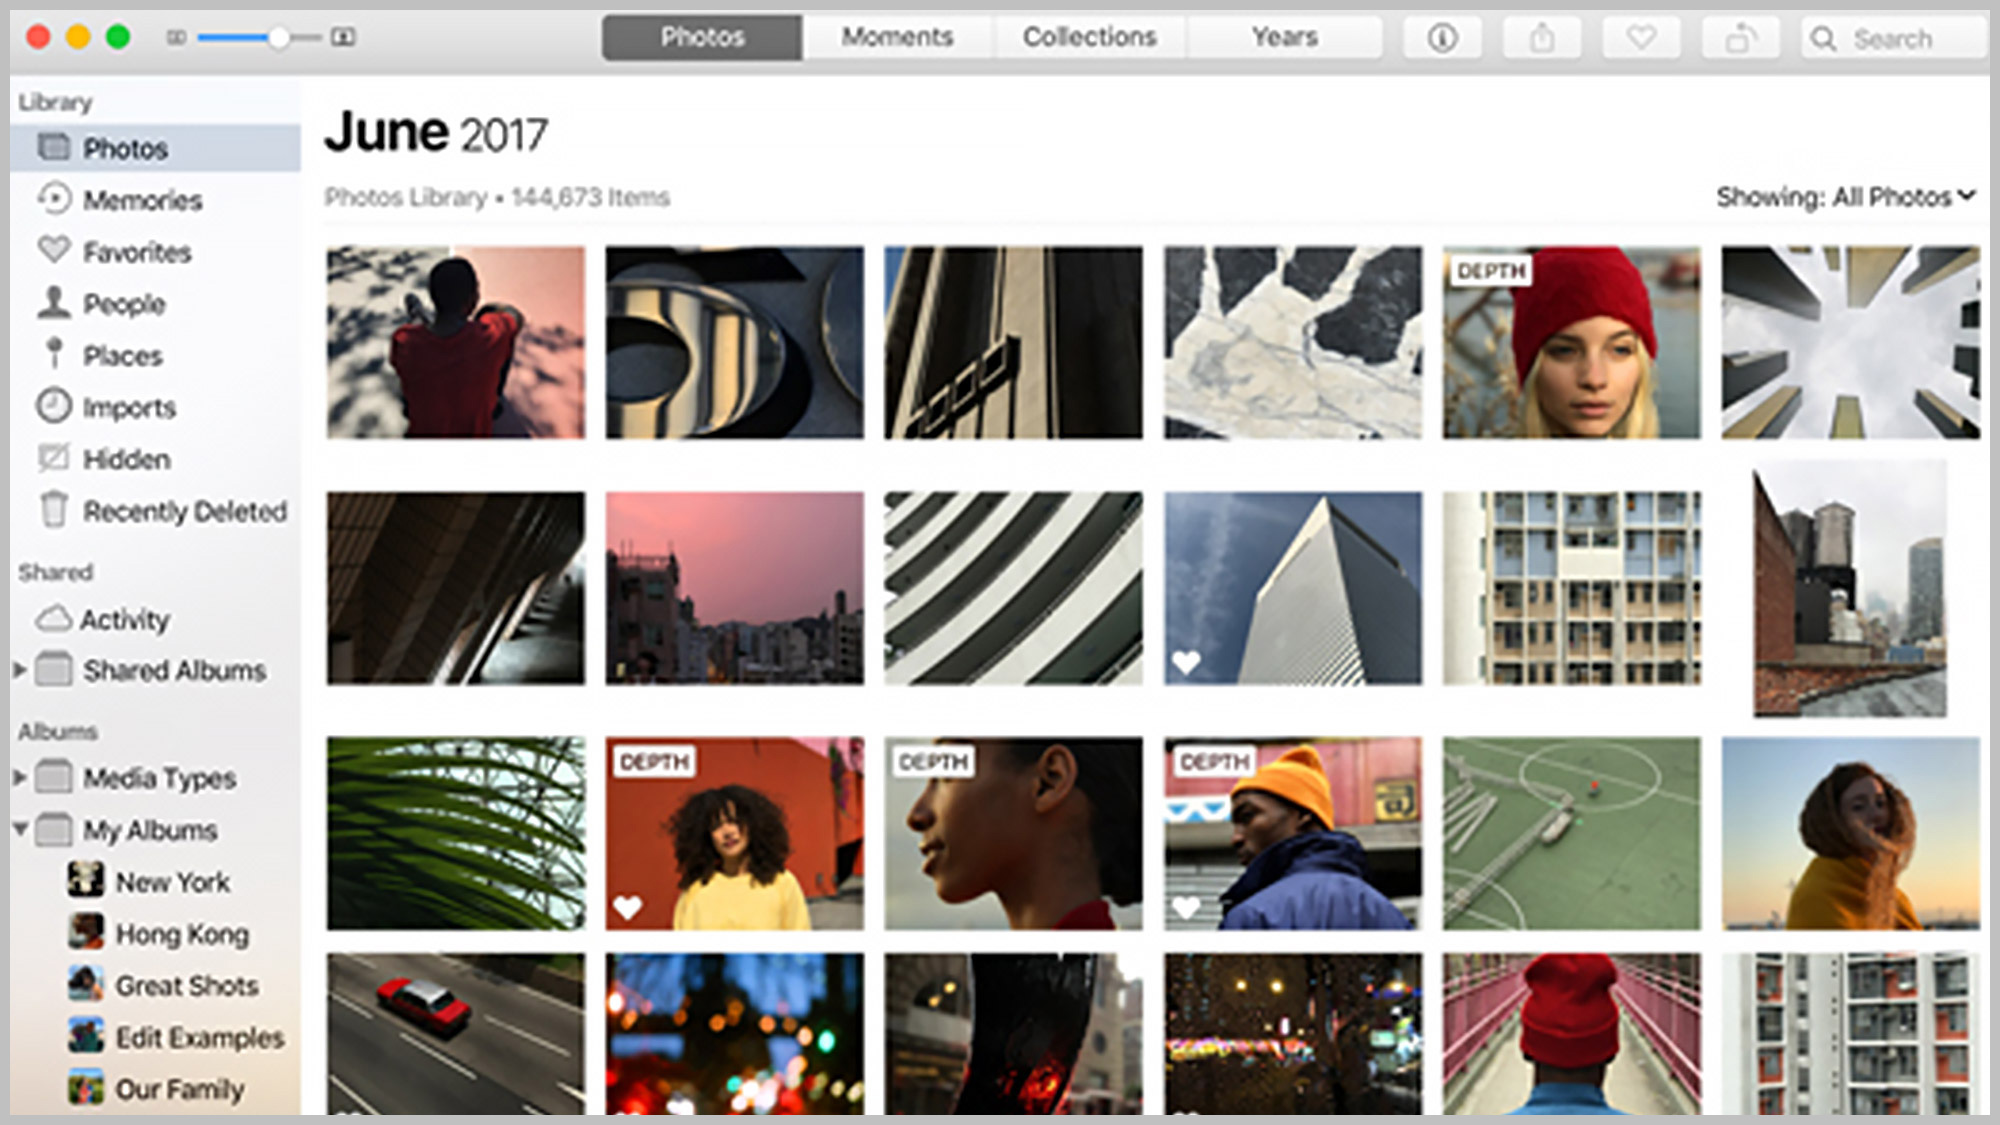 Best photo storage service: iCloud